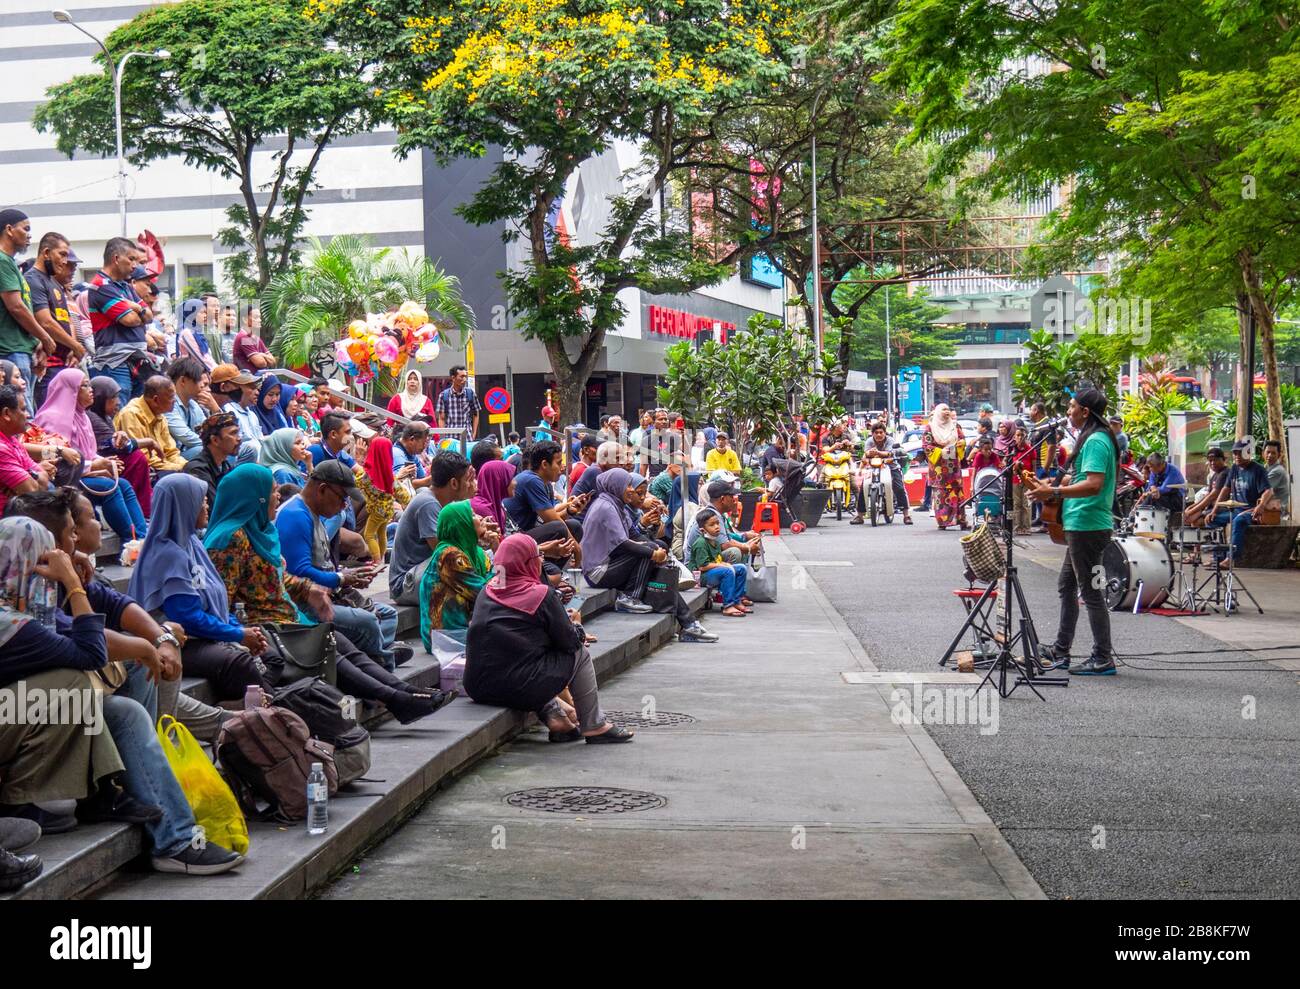 Man playing guitar free concert  street performance if front of audience in tree lined Jalan Tuanku Abdul Rahman street central Kuala Lumpur Malaysia. Stock Photo